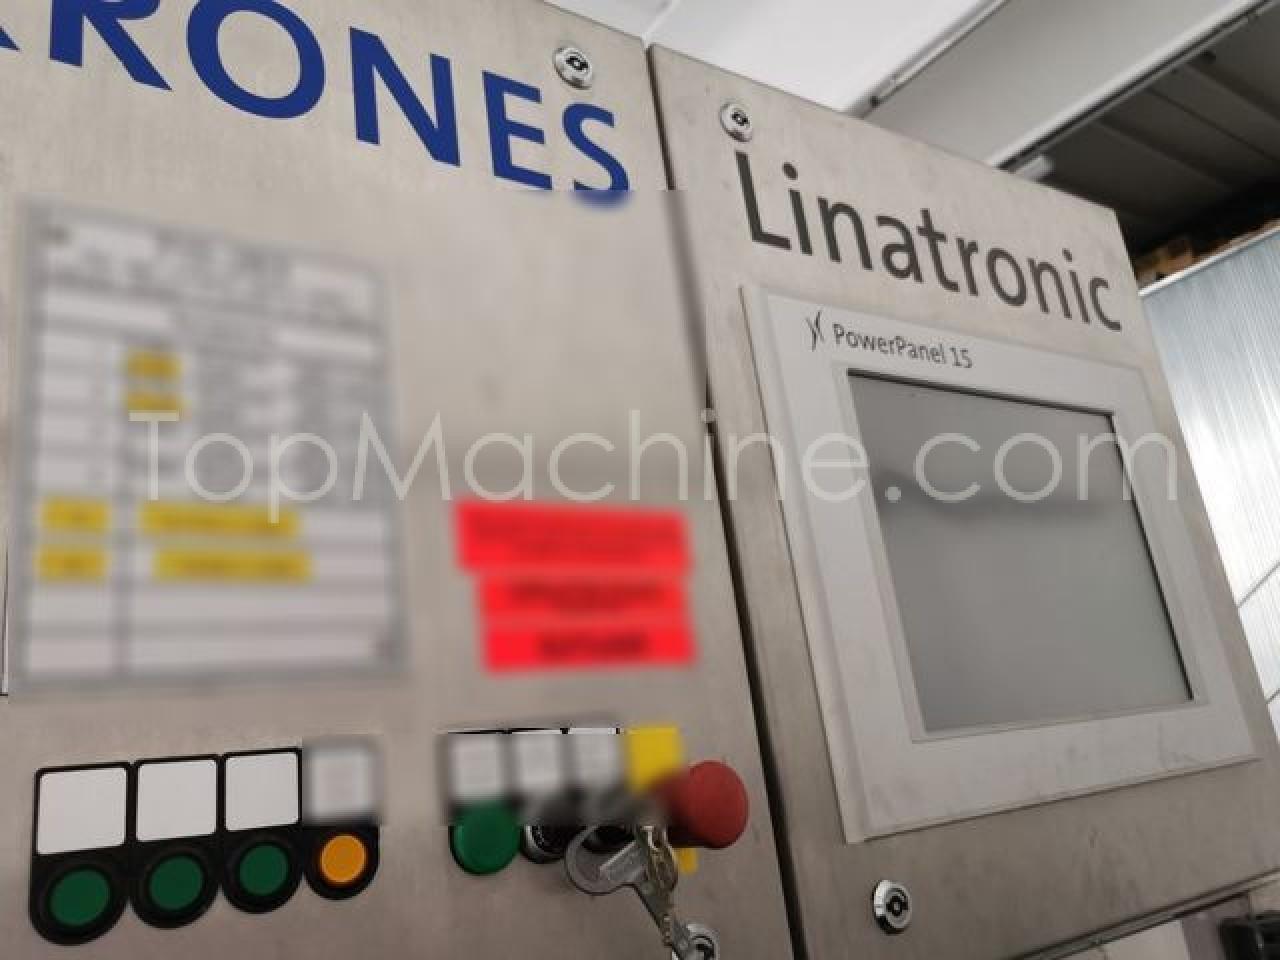 Used Krones Linatronic Boissons & Liquides Divers